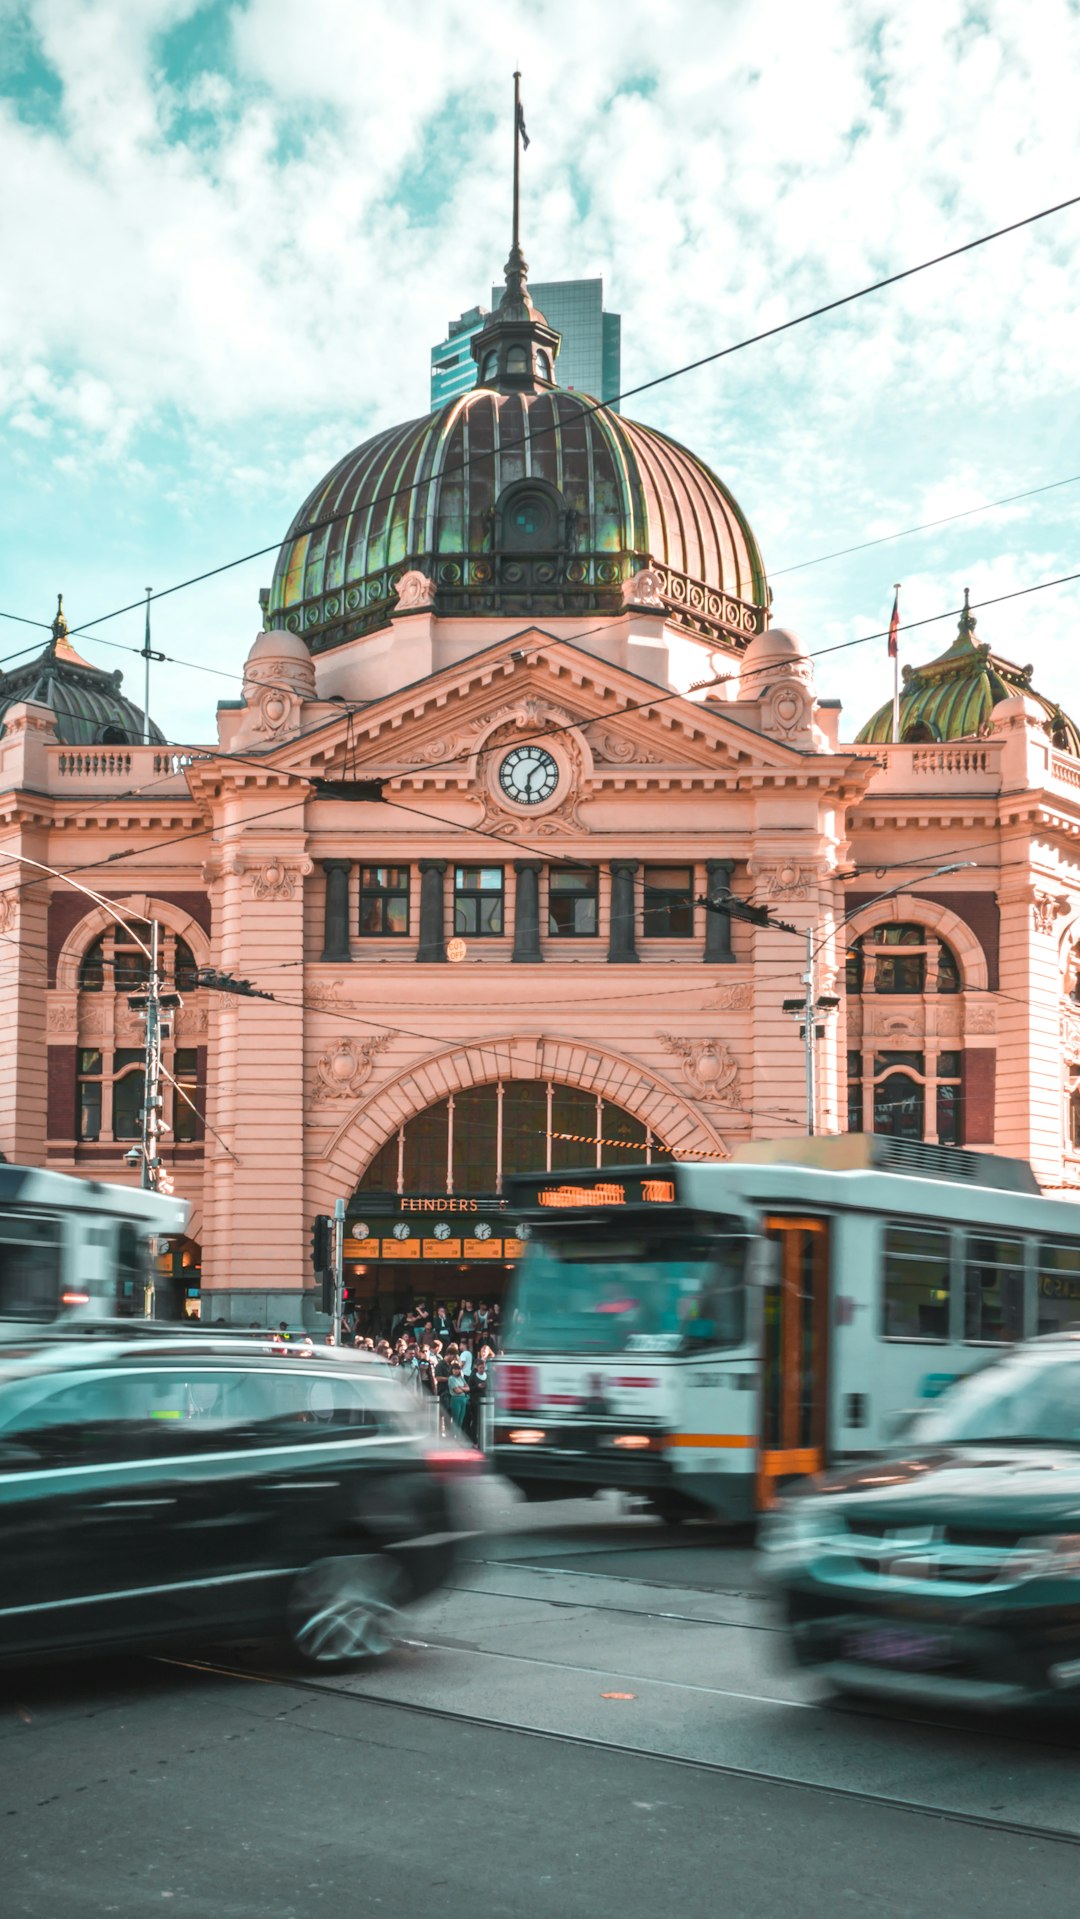 Travel Tips and Stories of Flinders Street Railway Station in Australia